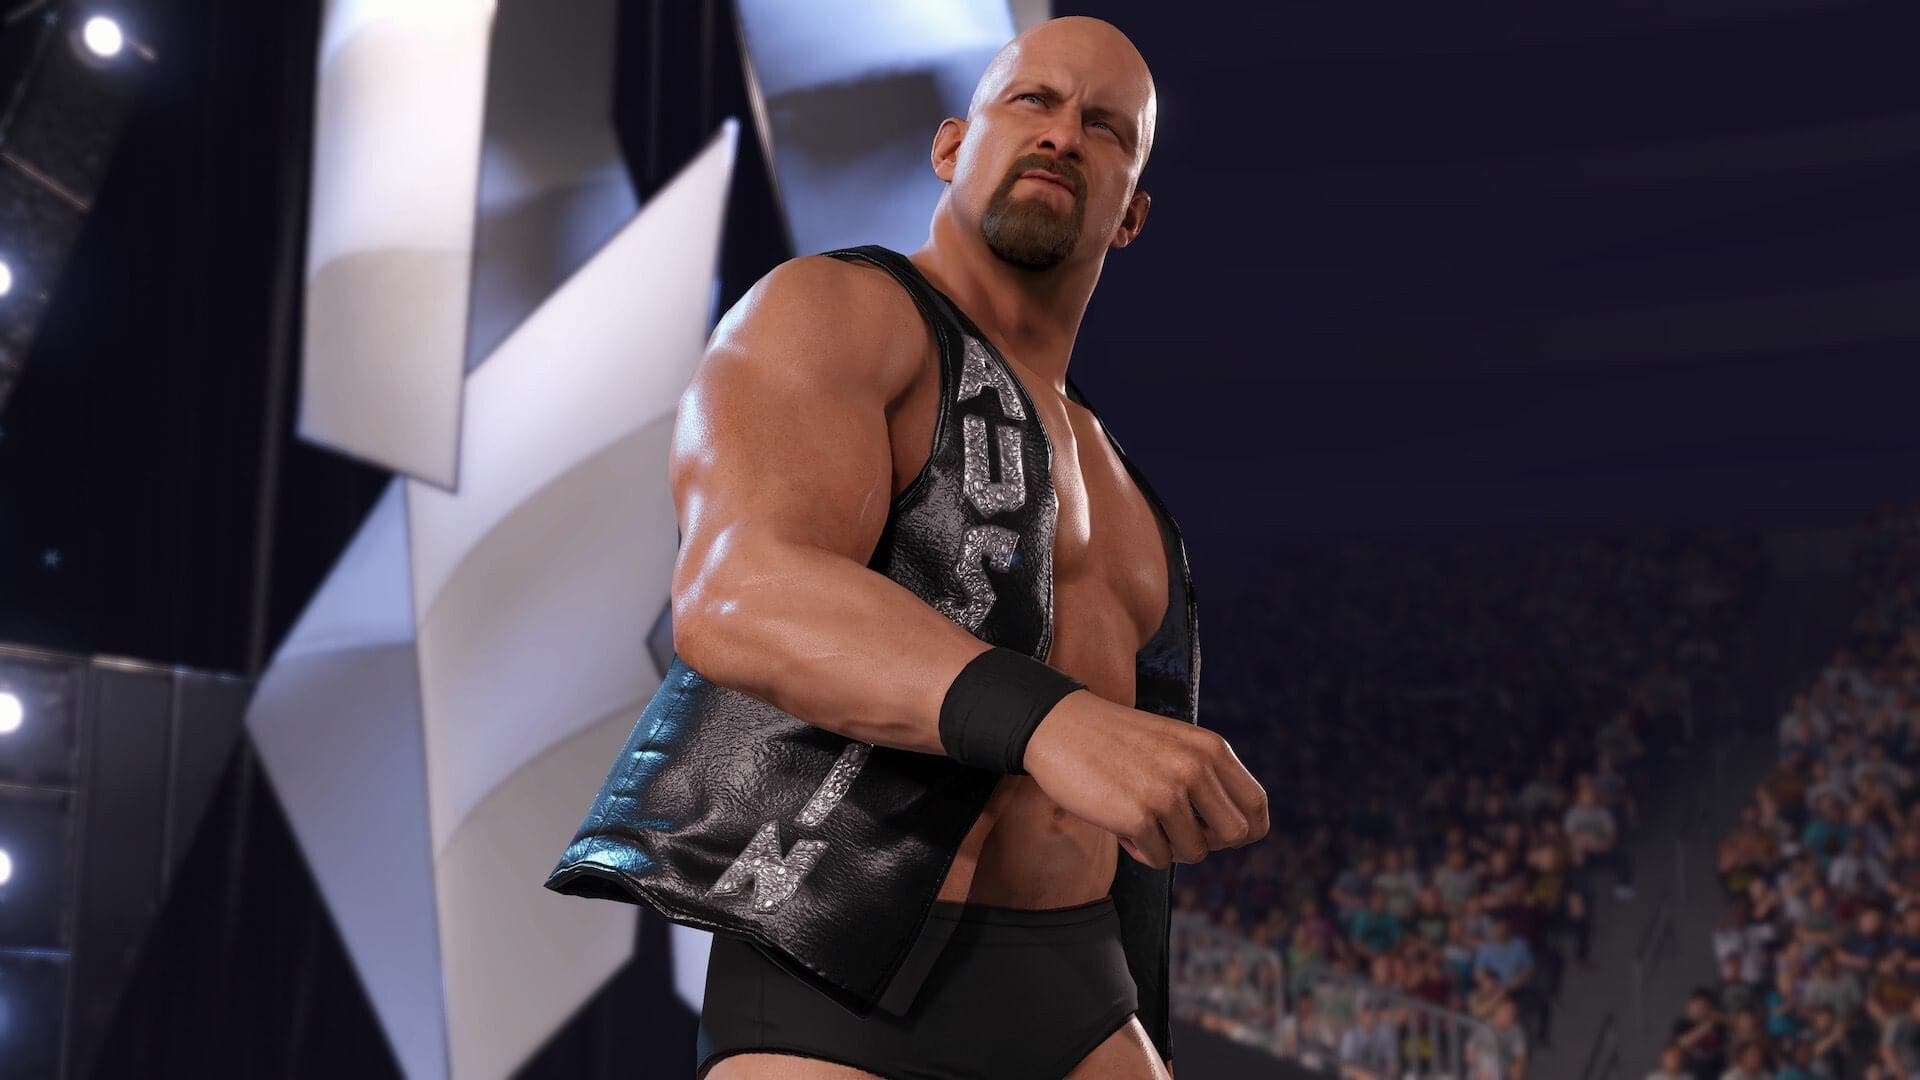 WWE 2K23 (Standard Edition) - Xbox